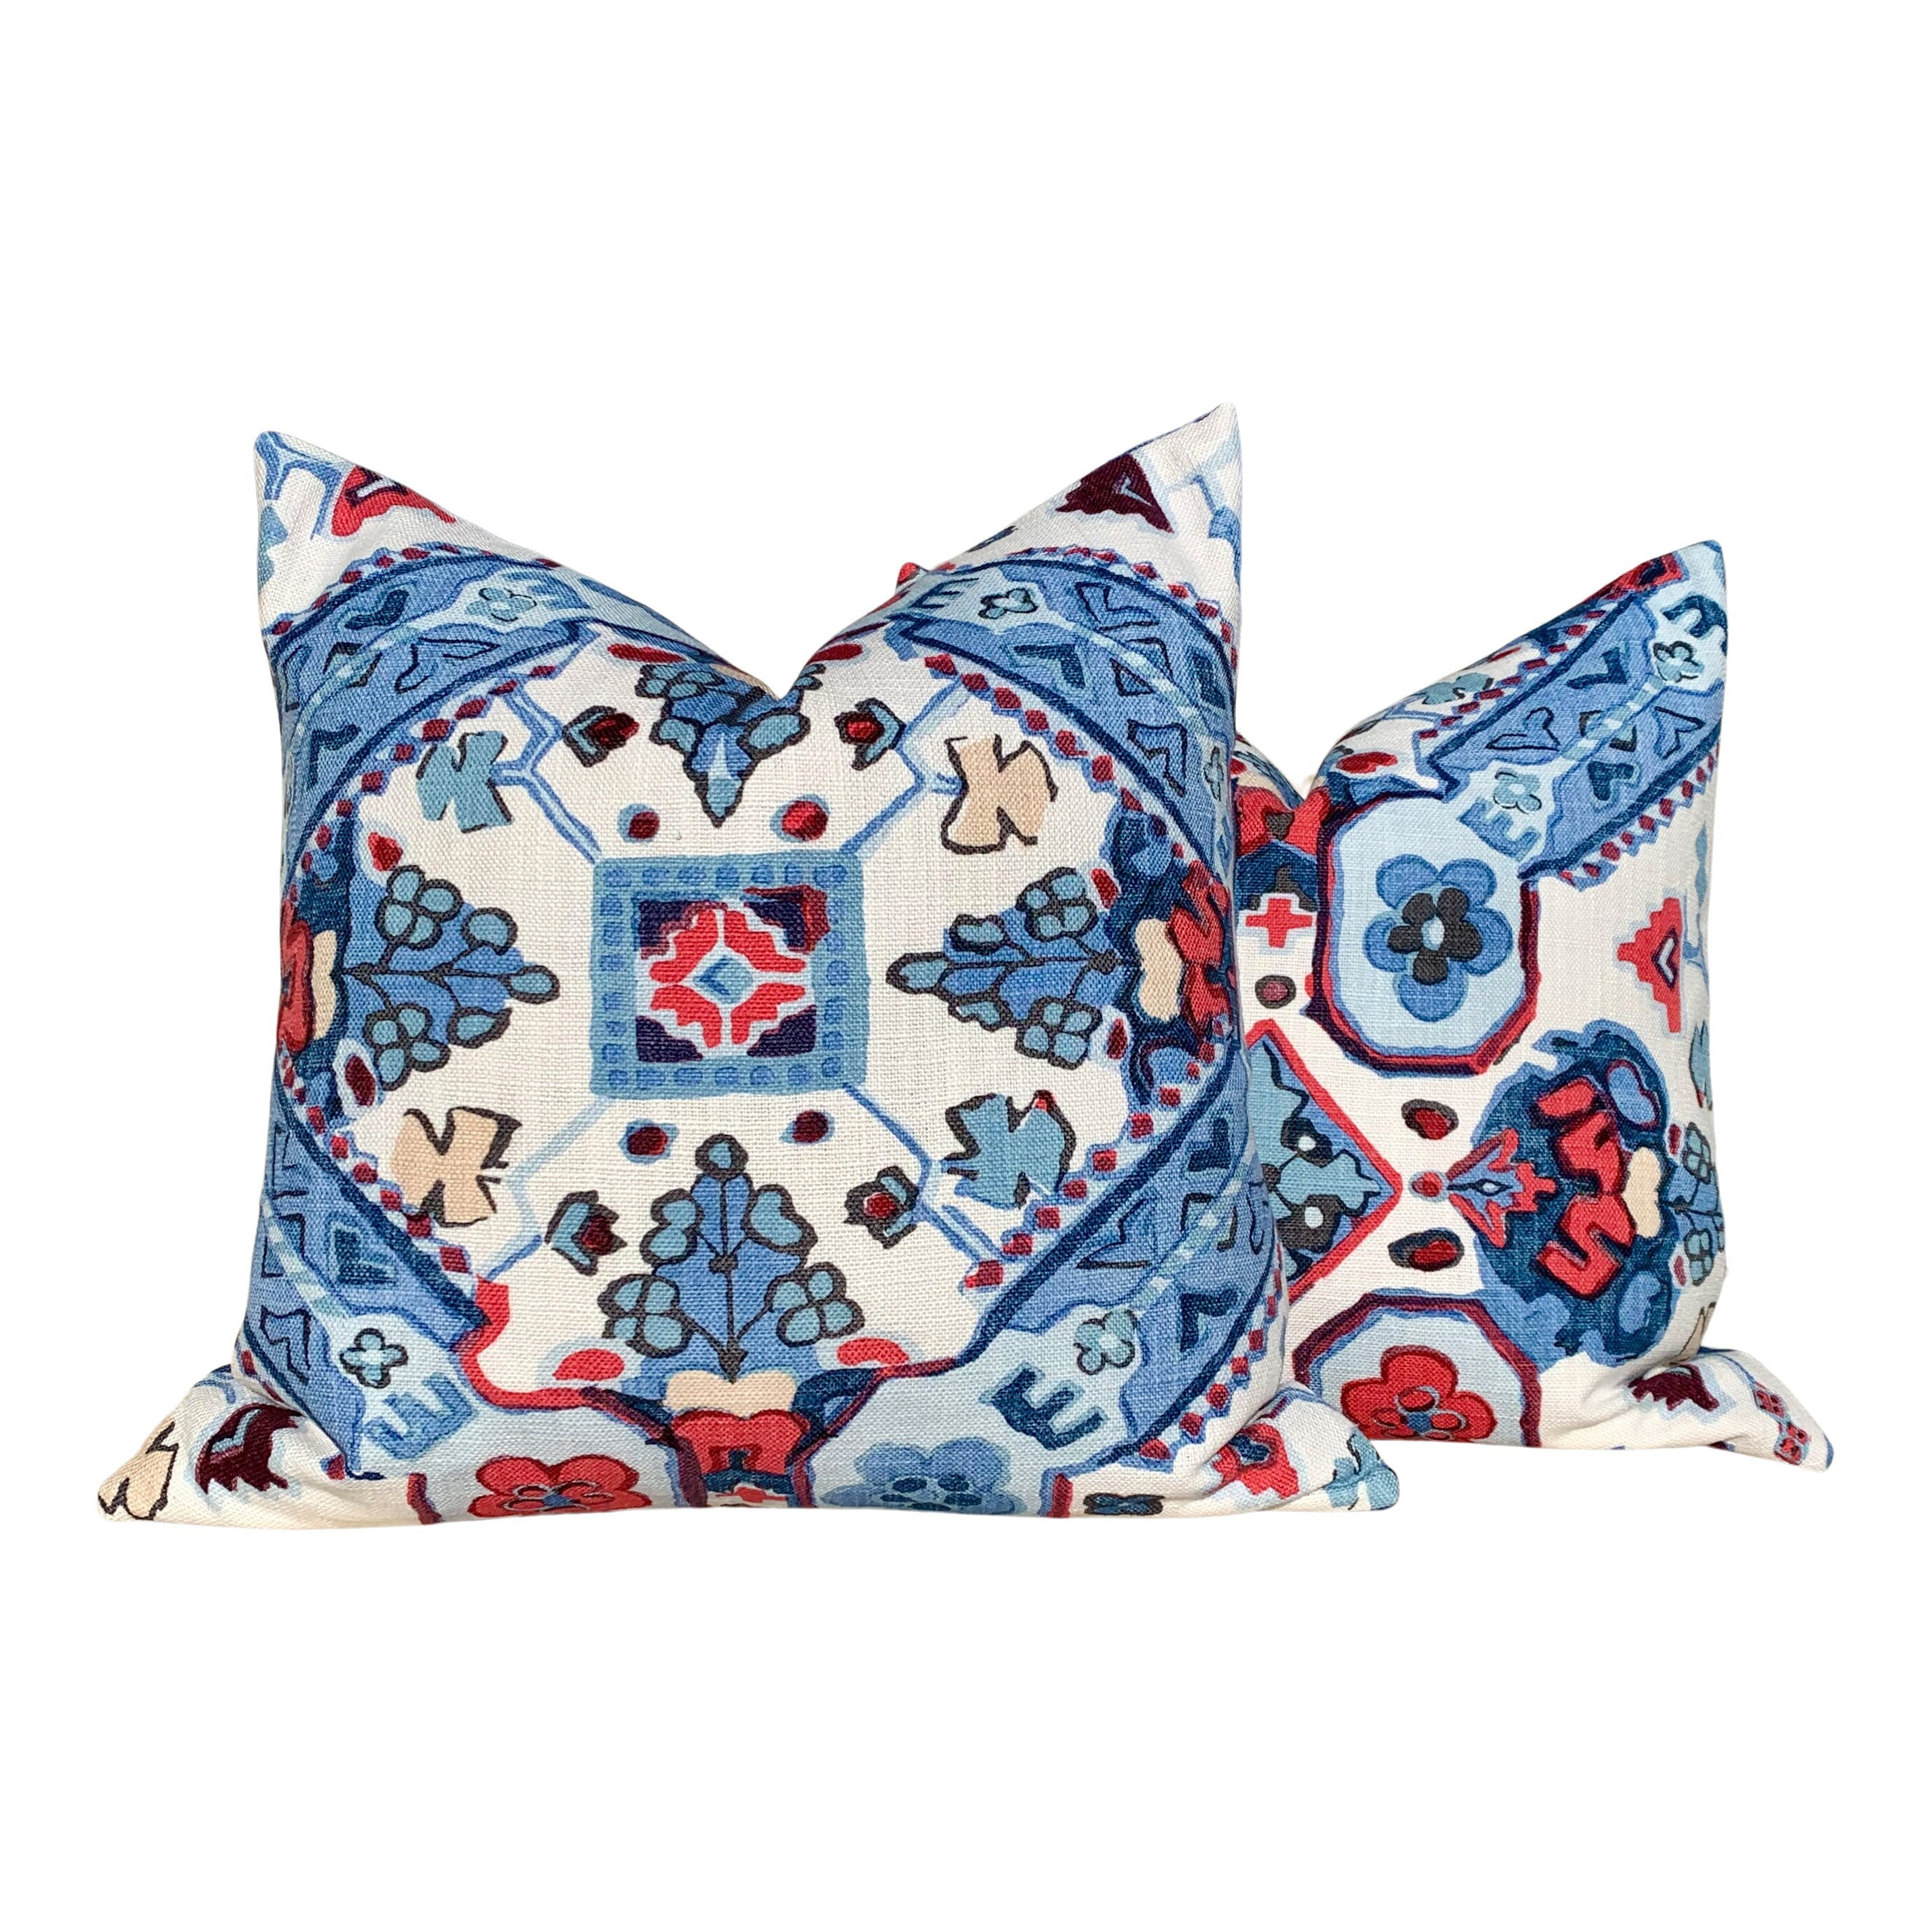 Thibaut Persian Caret Pillow in Blue and Red. Lumbar Pillow// Designer Pillow// Decorative Pillow Cover// Throw Cushion Cover Accent Pillow